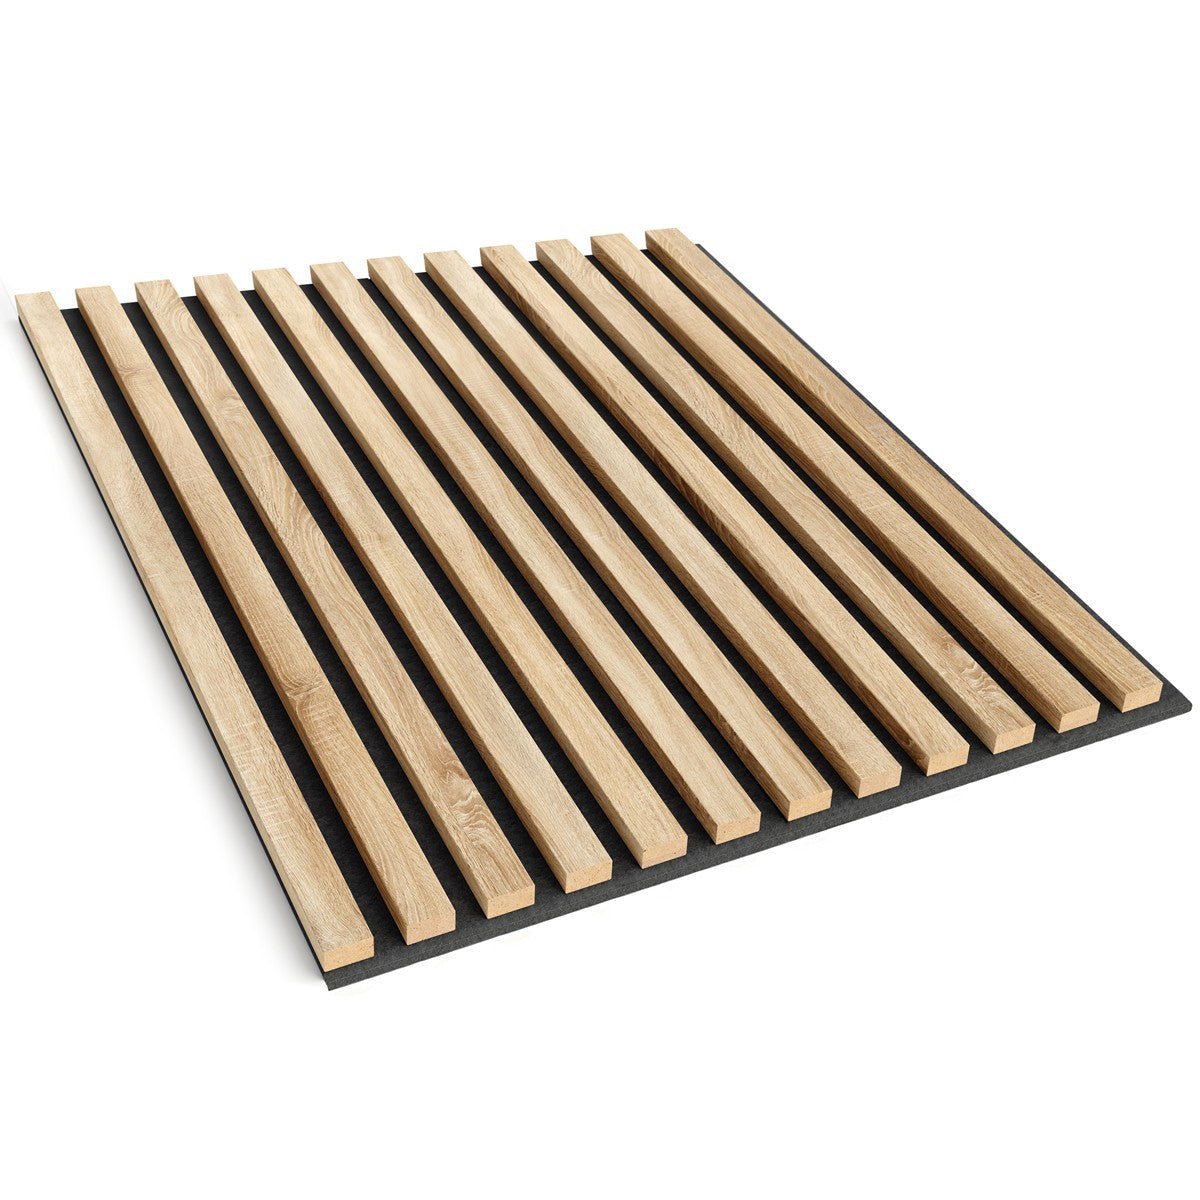 Acoustic Slats panel square - Grey OAK - Slats acoustic 3D Panels | DecorMania